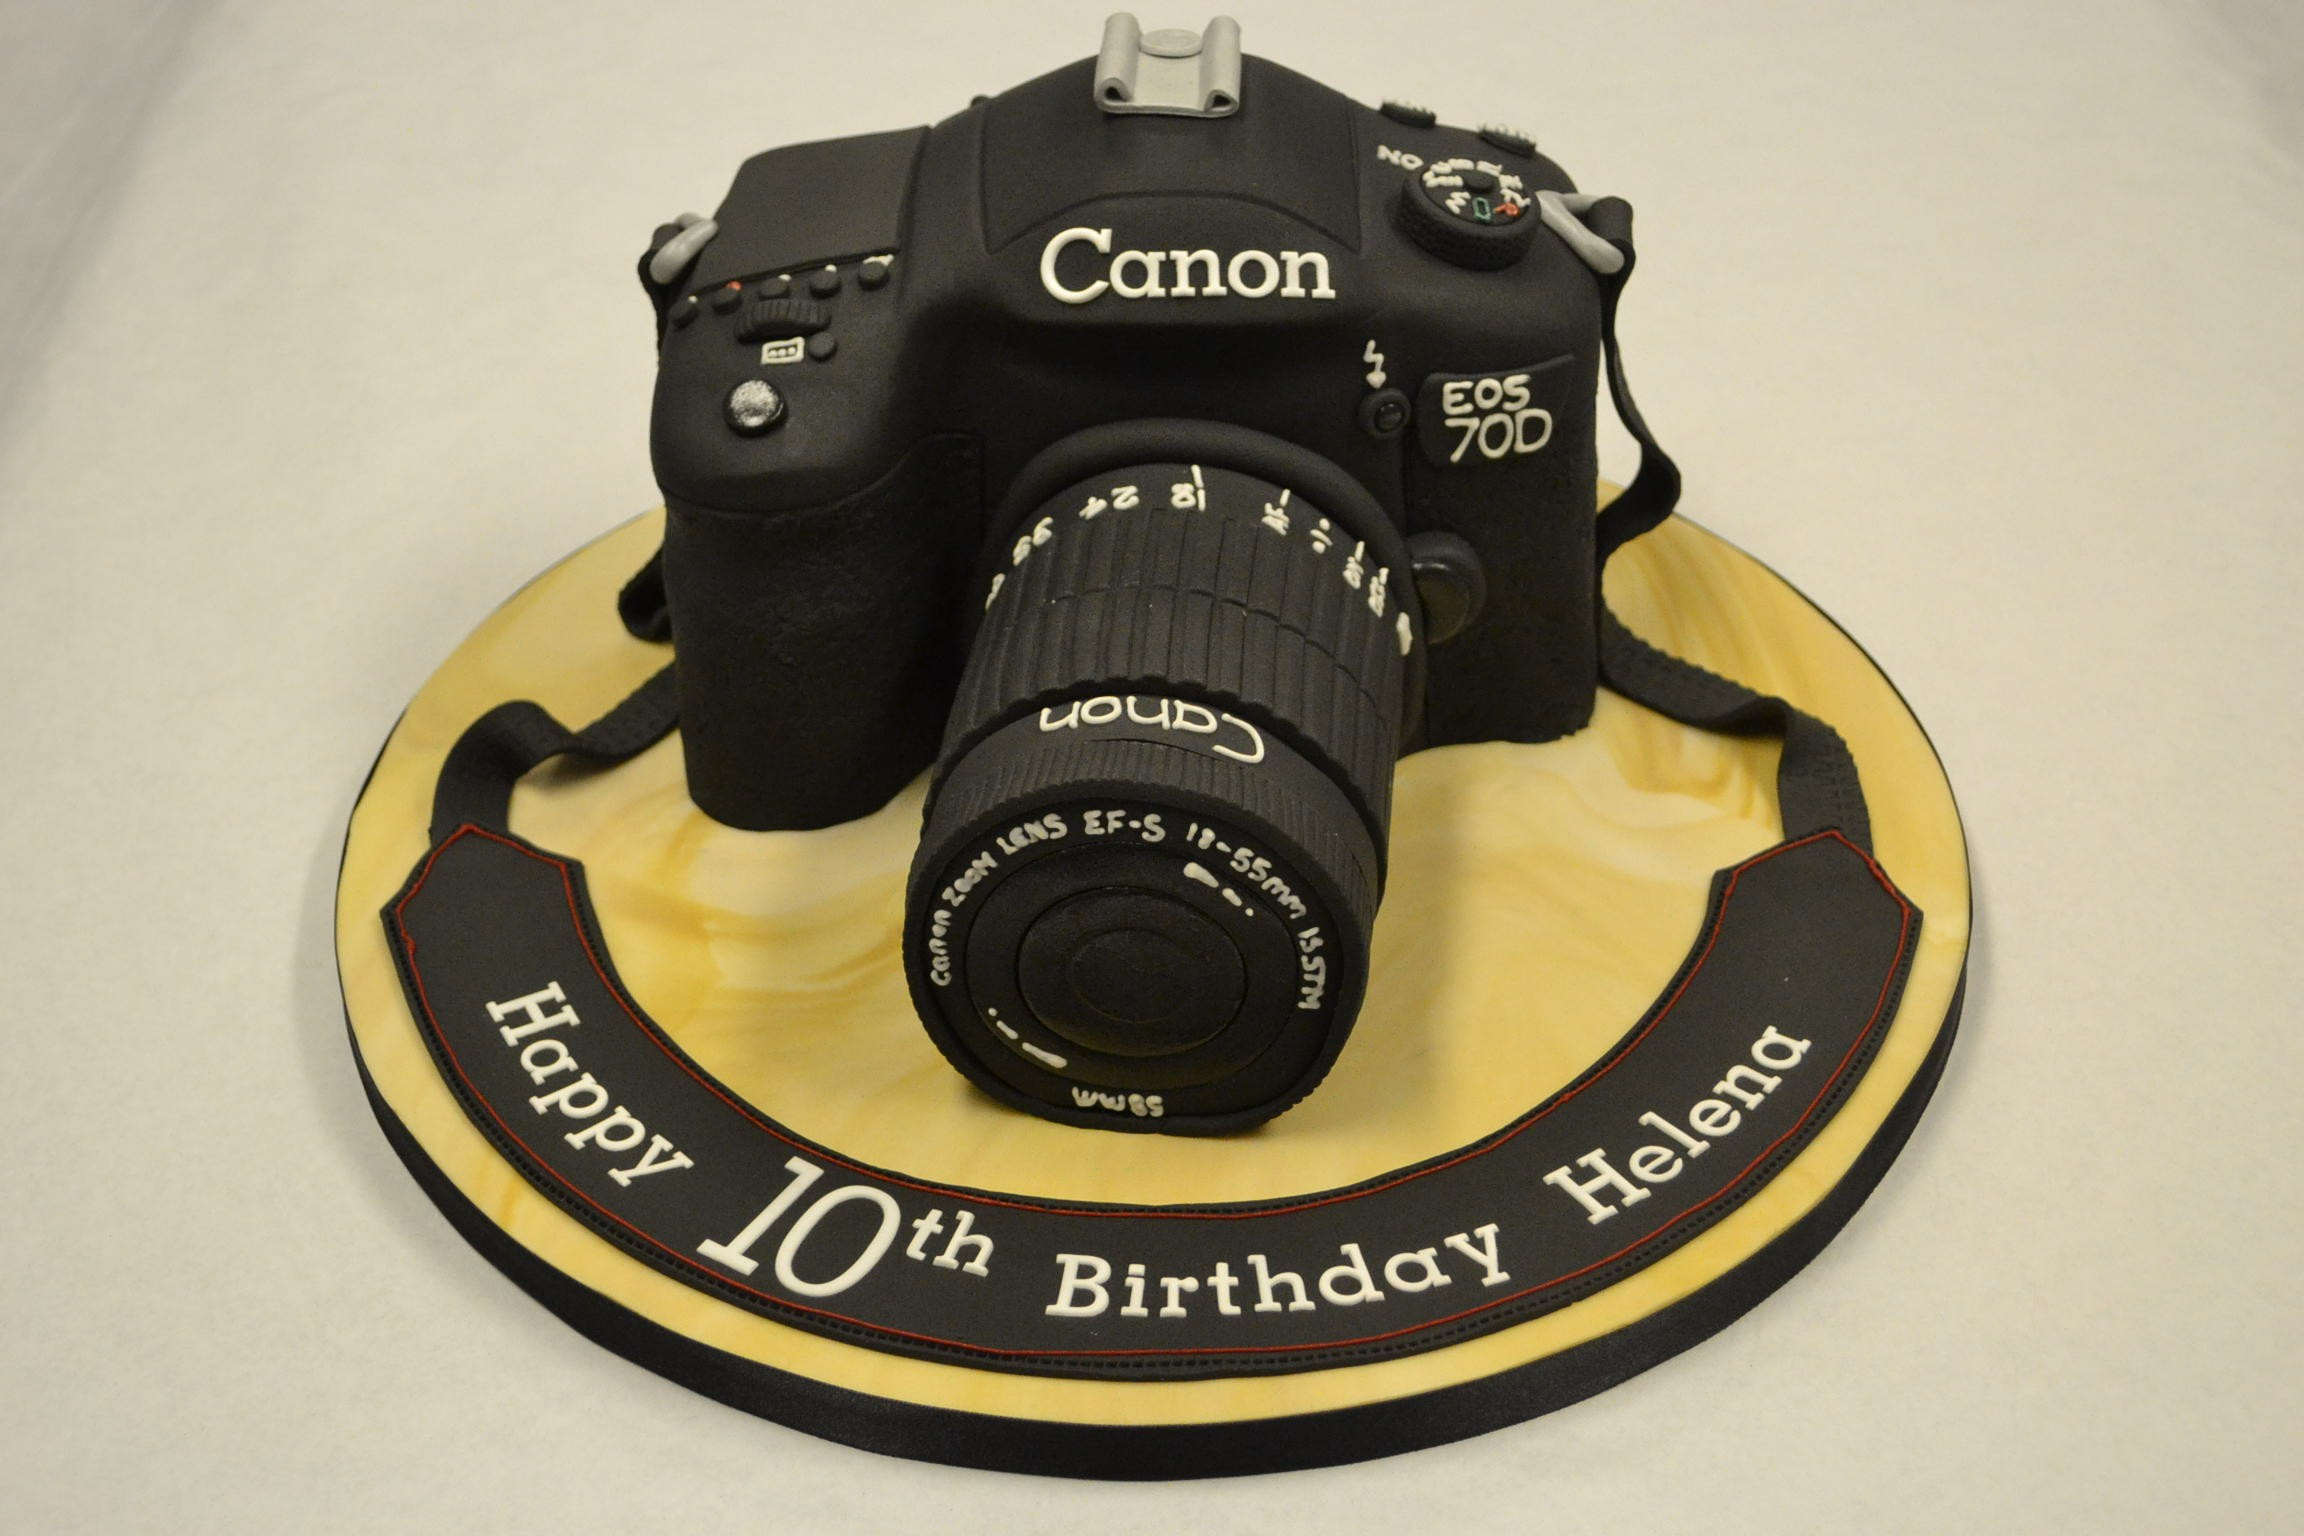 Camera Birthday Cake
 70D Canon Camera Cake Adult Birthday Cakes Celebration